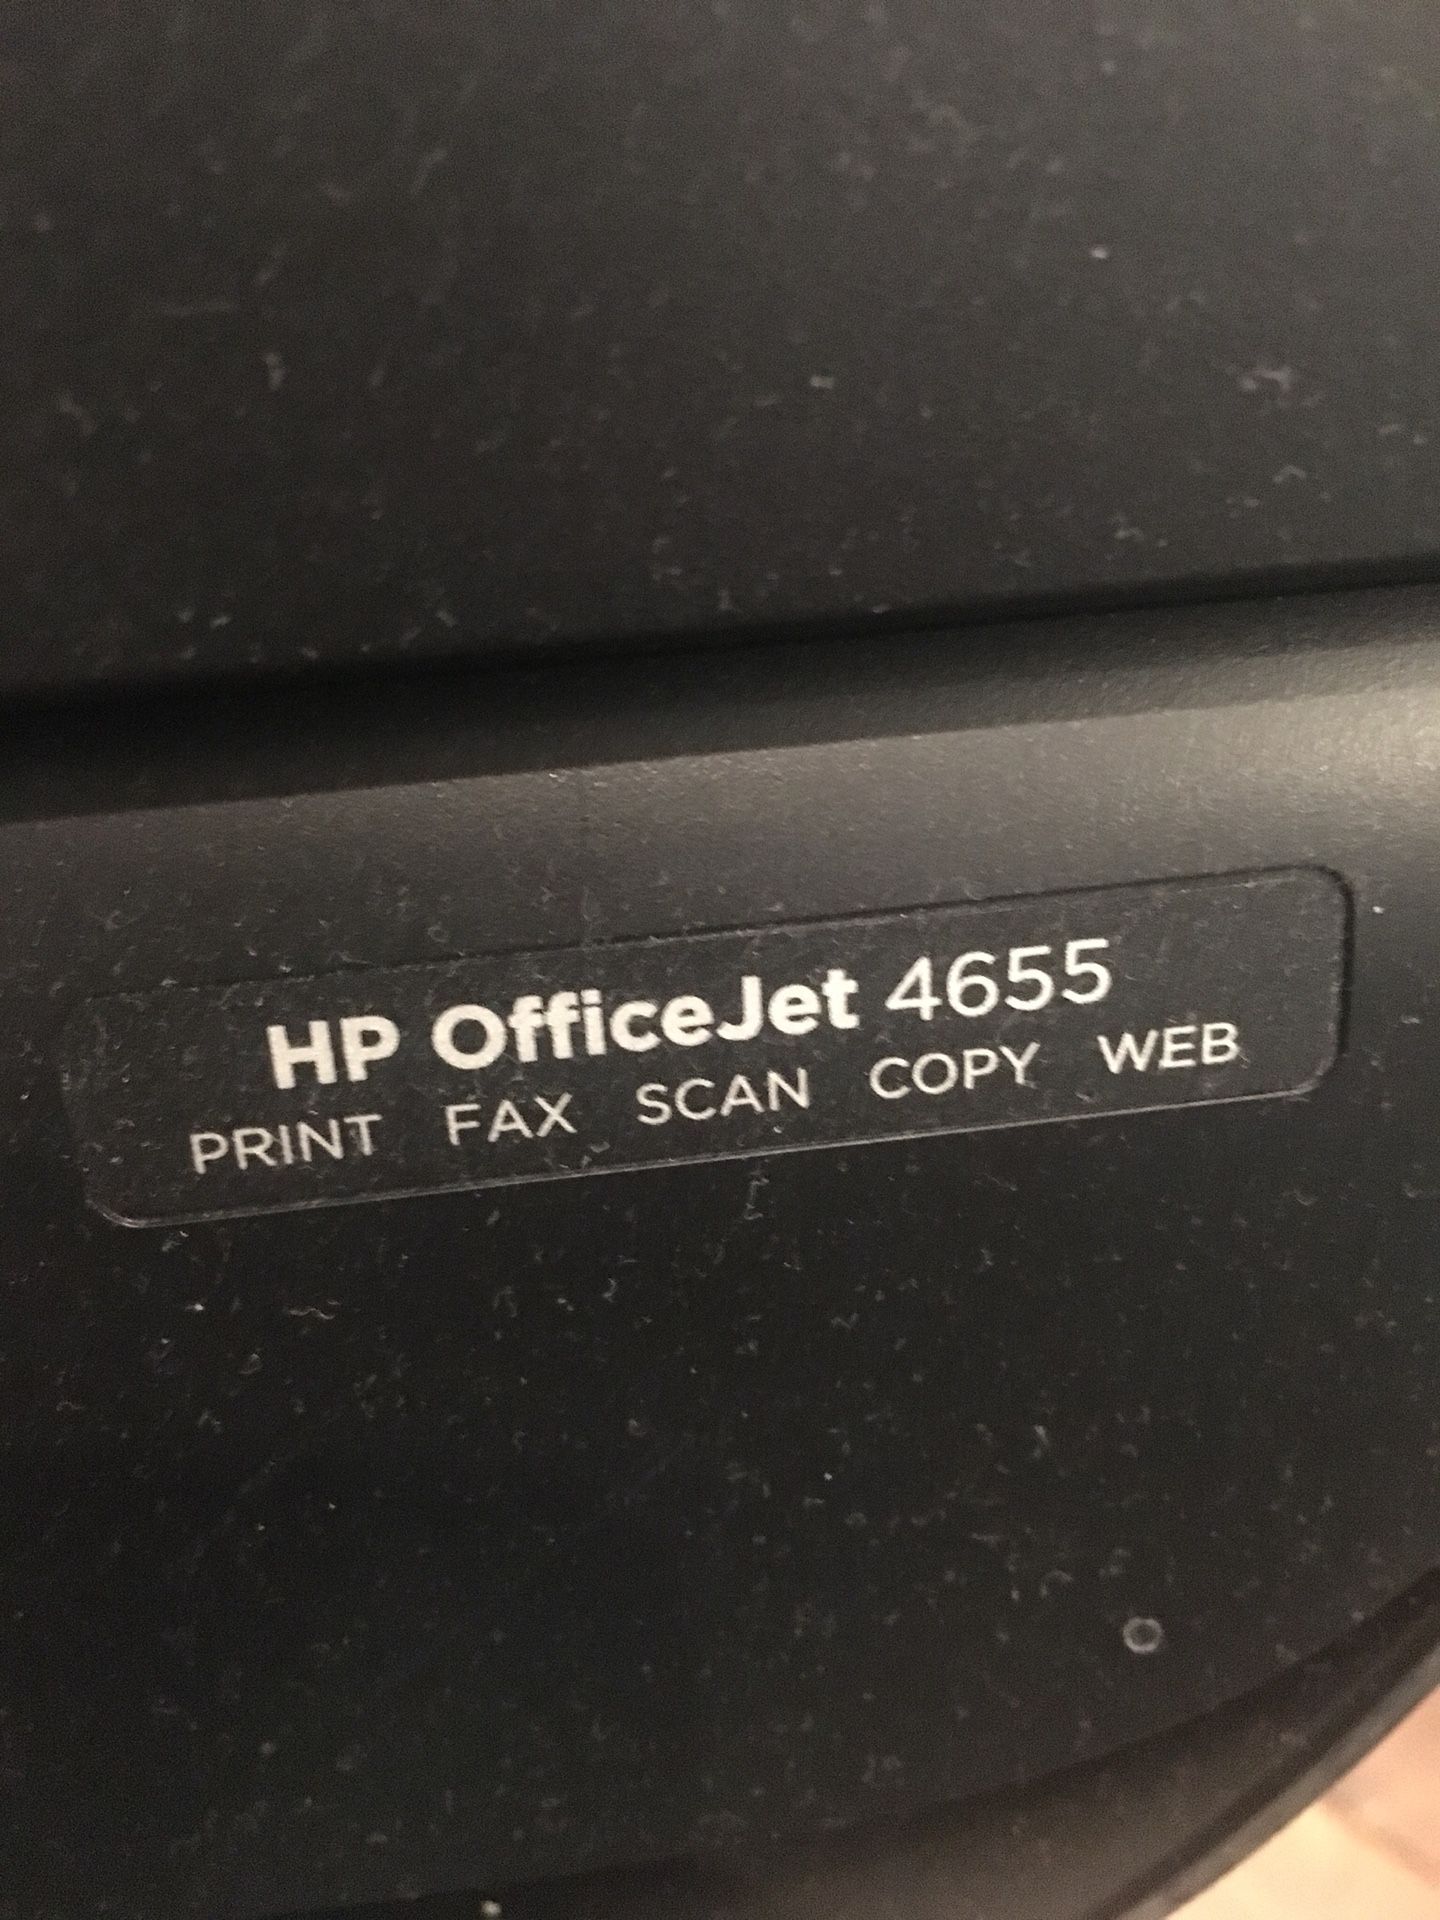 Printer: Print Fax Scan Copy Bluetooth